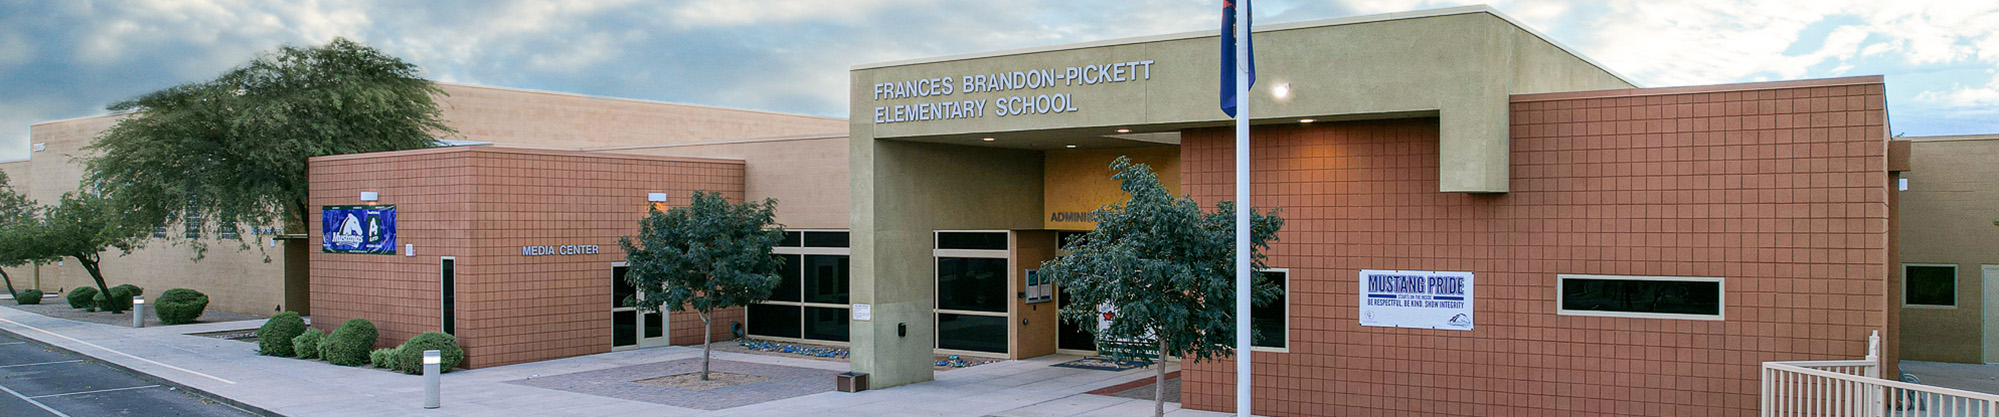 Front view of Frances Brandon-Pickett Elementary School